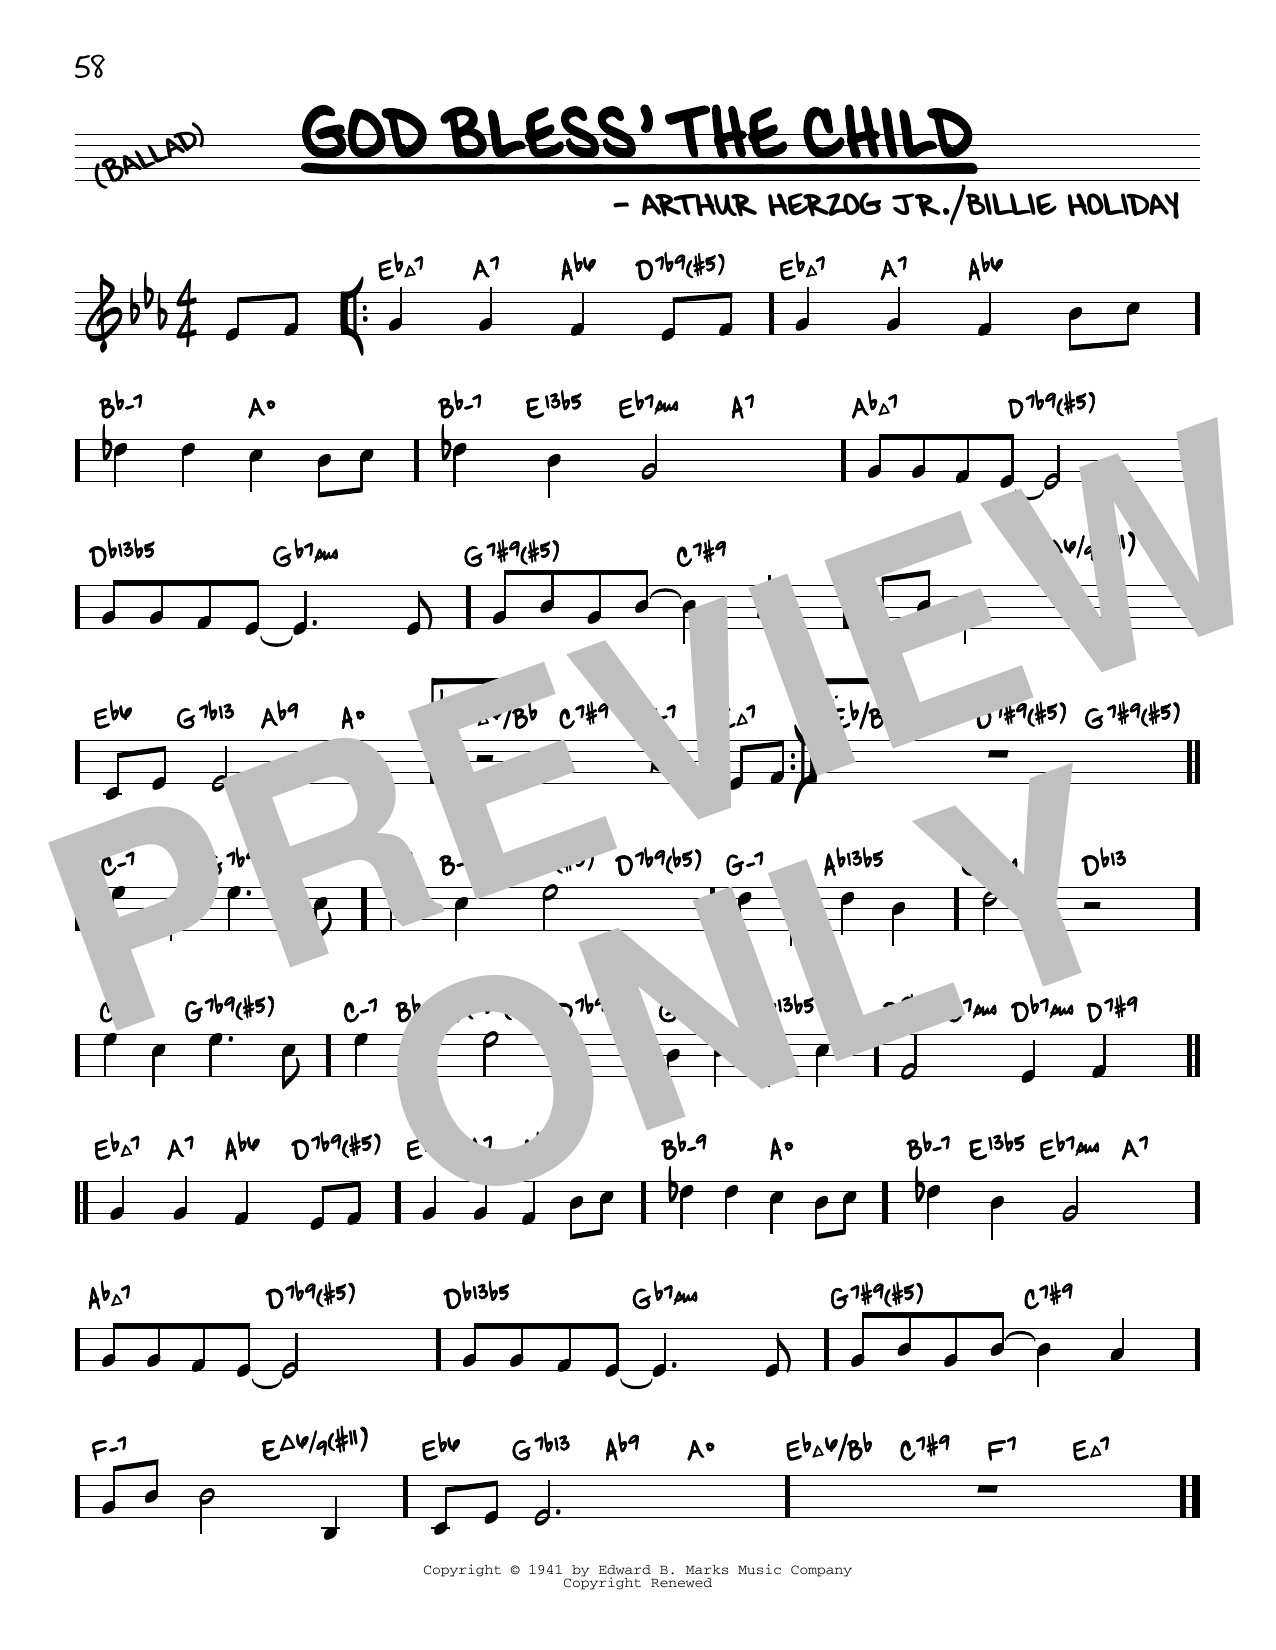 Billie Holiday God Bless' The Child (arr. David Hazeltine) Sheet Music Notes & Chords for Real Book – Enhanced Chords - Download or Print PDF